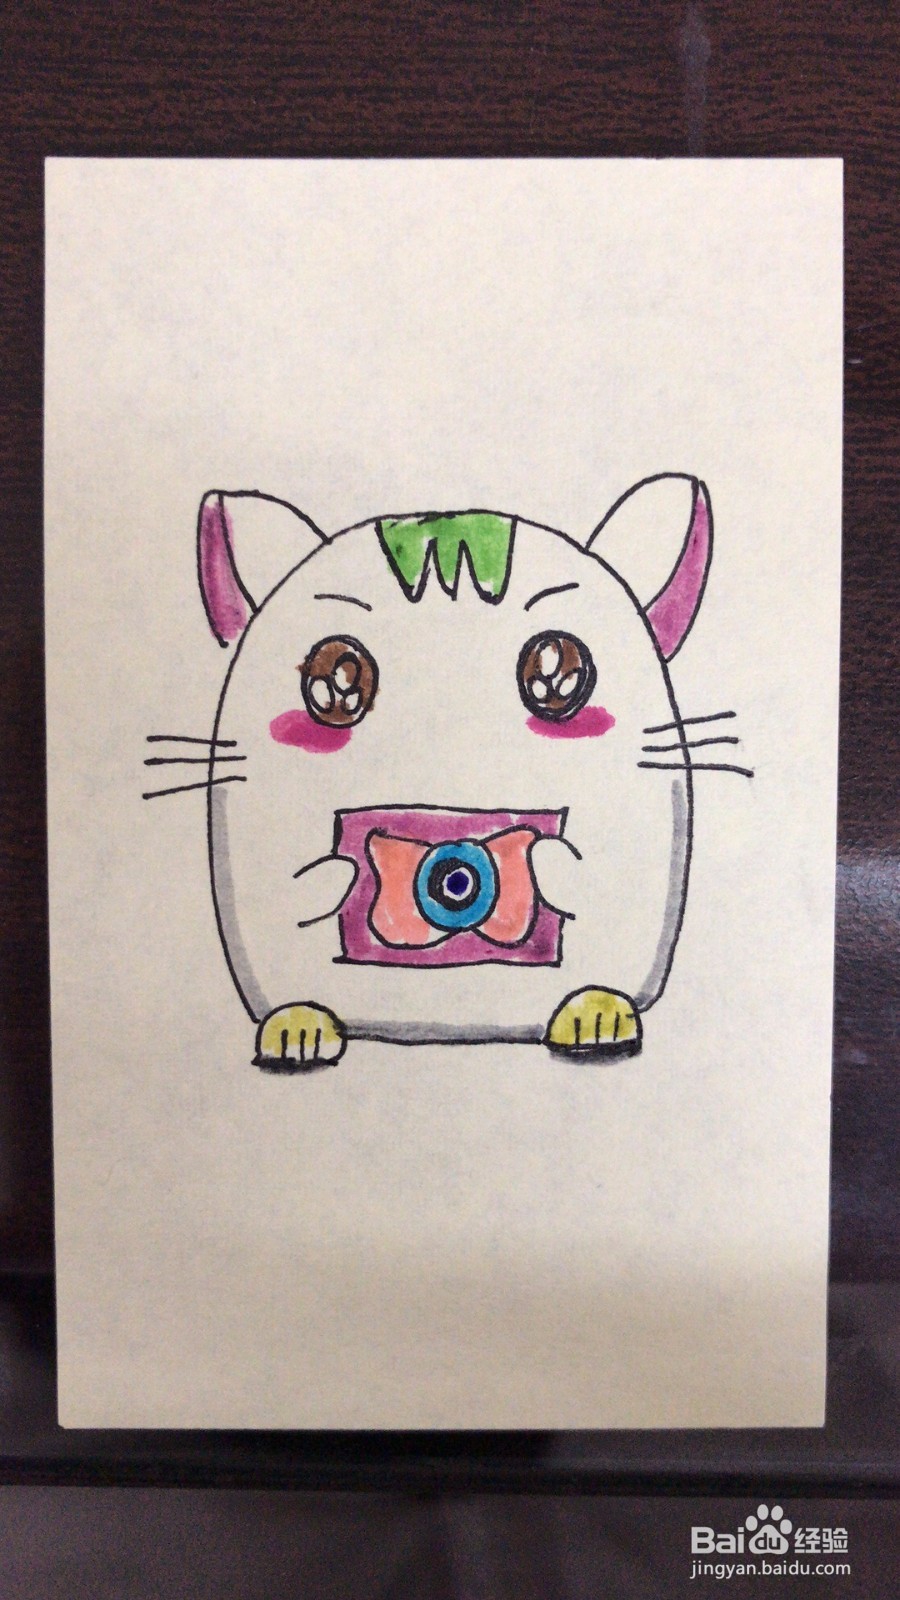 <b>如何绘制一个拿着相机的卡通老鼠</b>